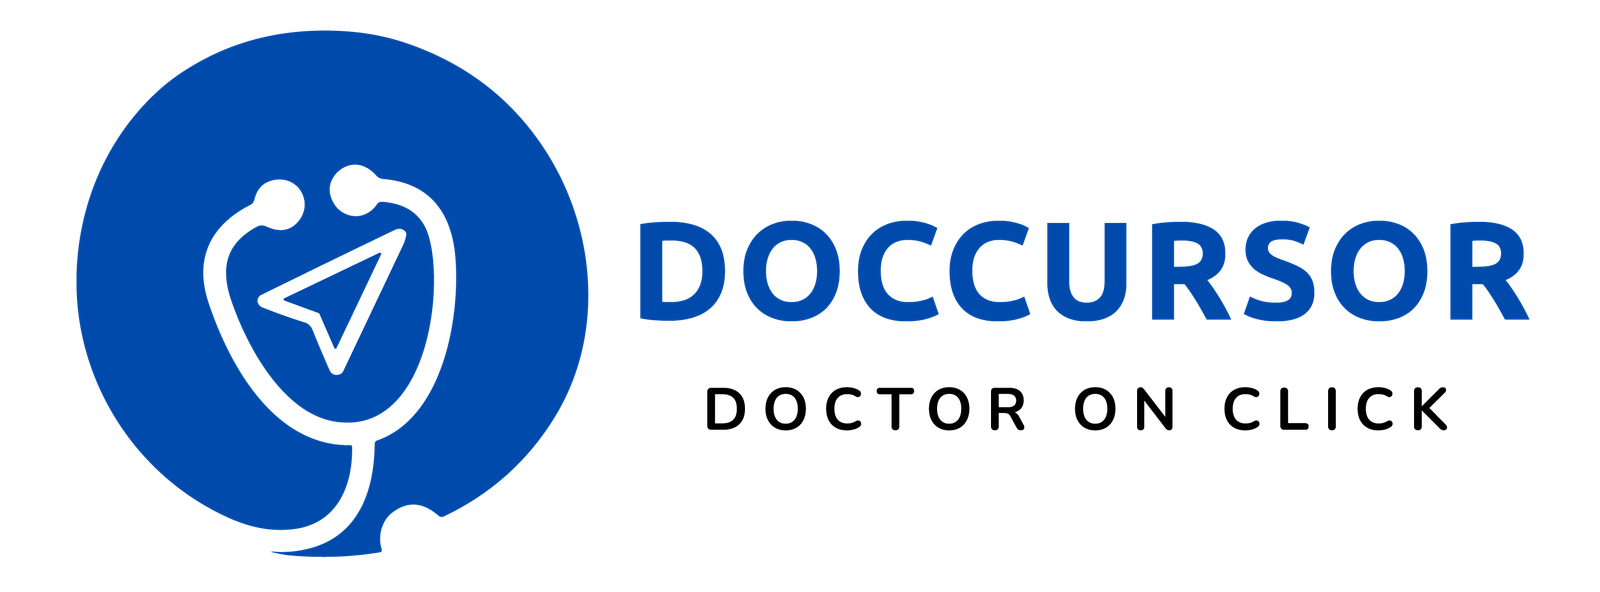 Doccursor